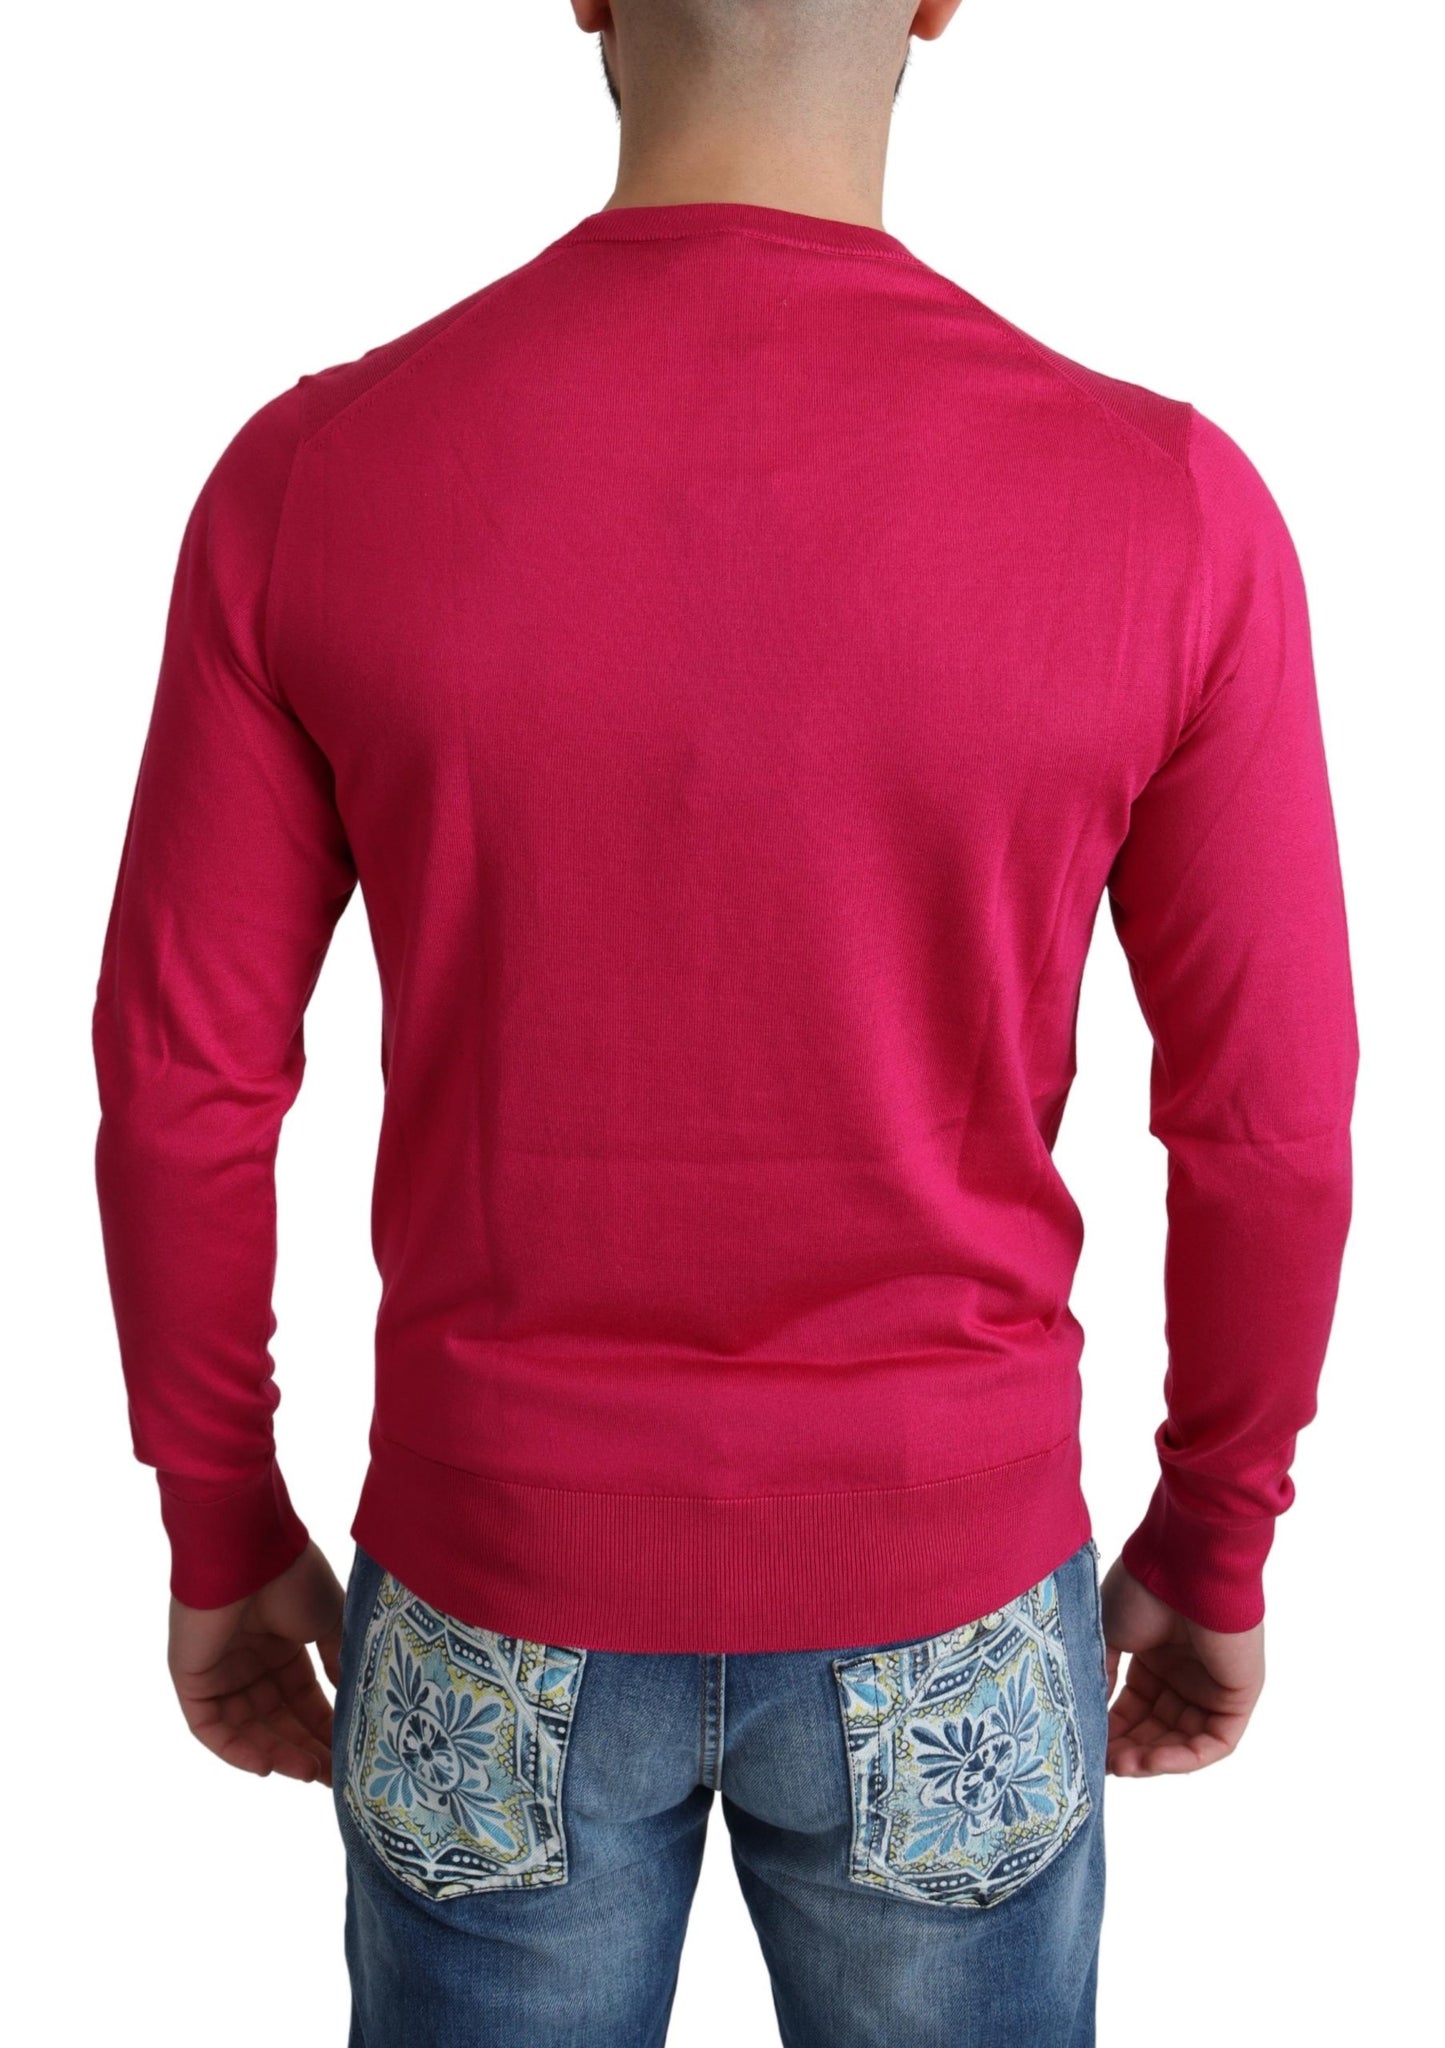 Pink Silk Crewneck Pullover Top Sweater